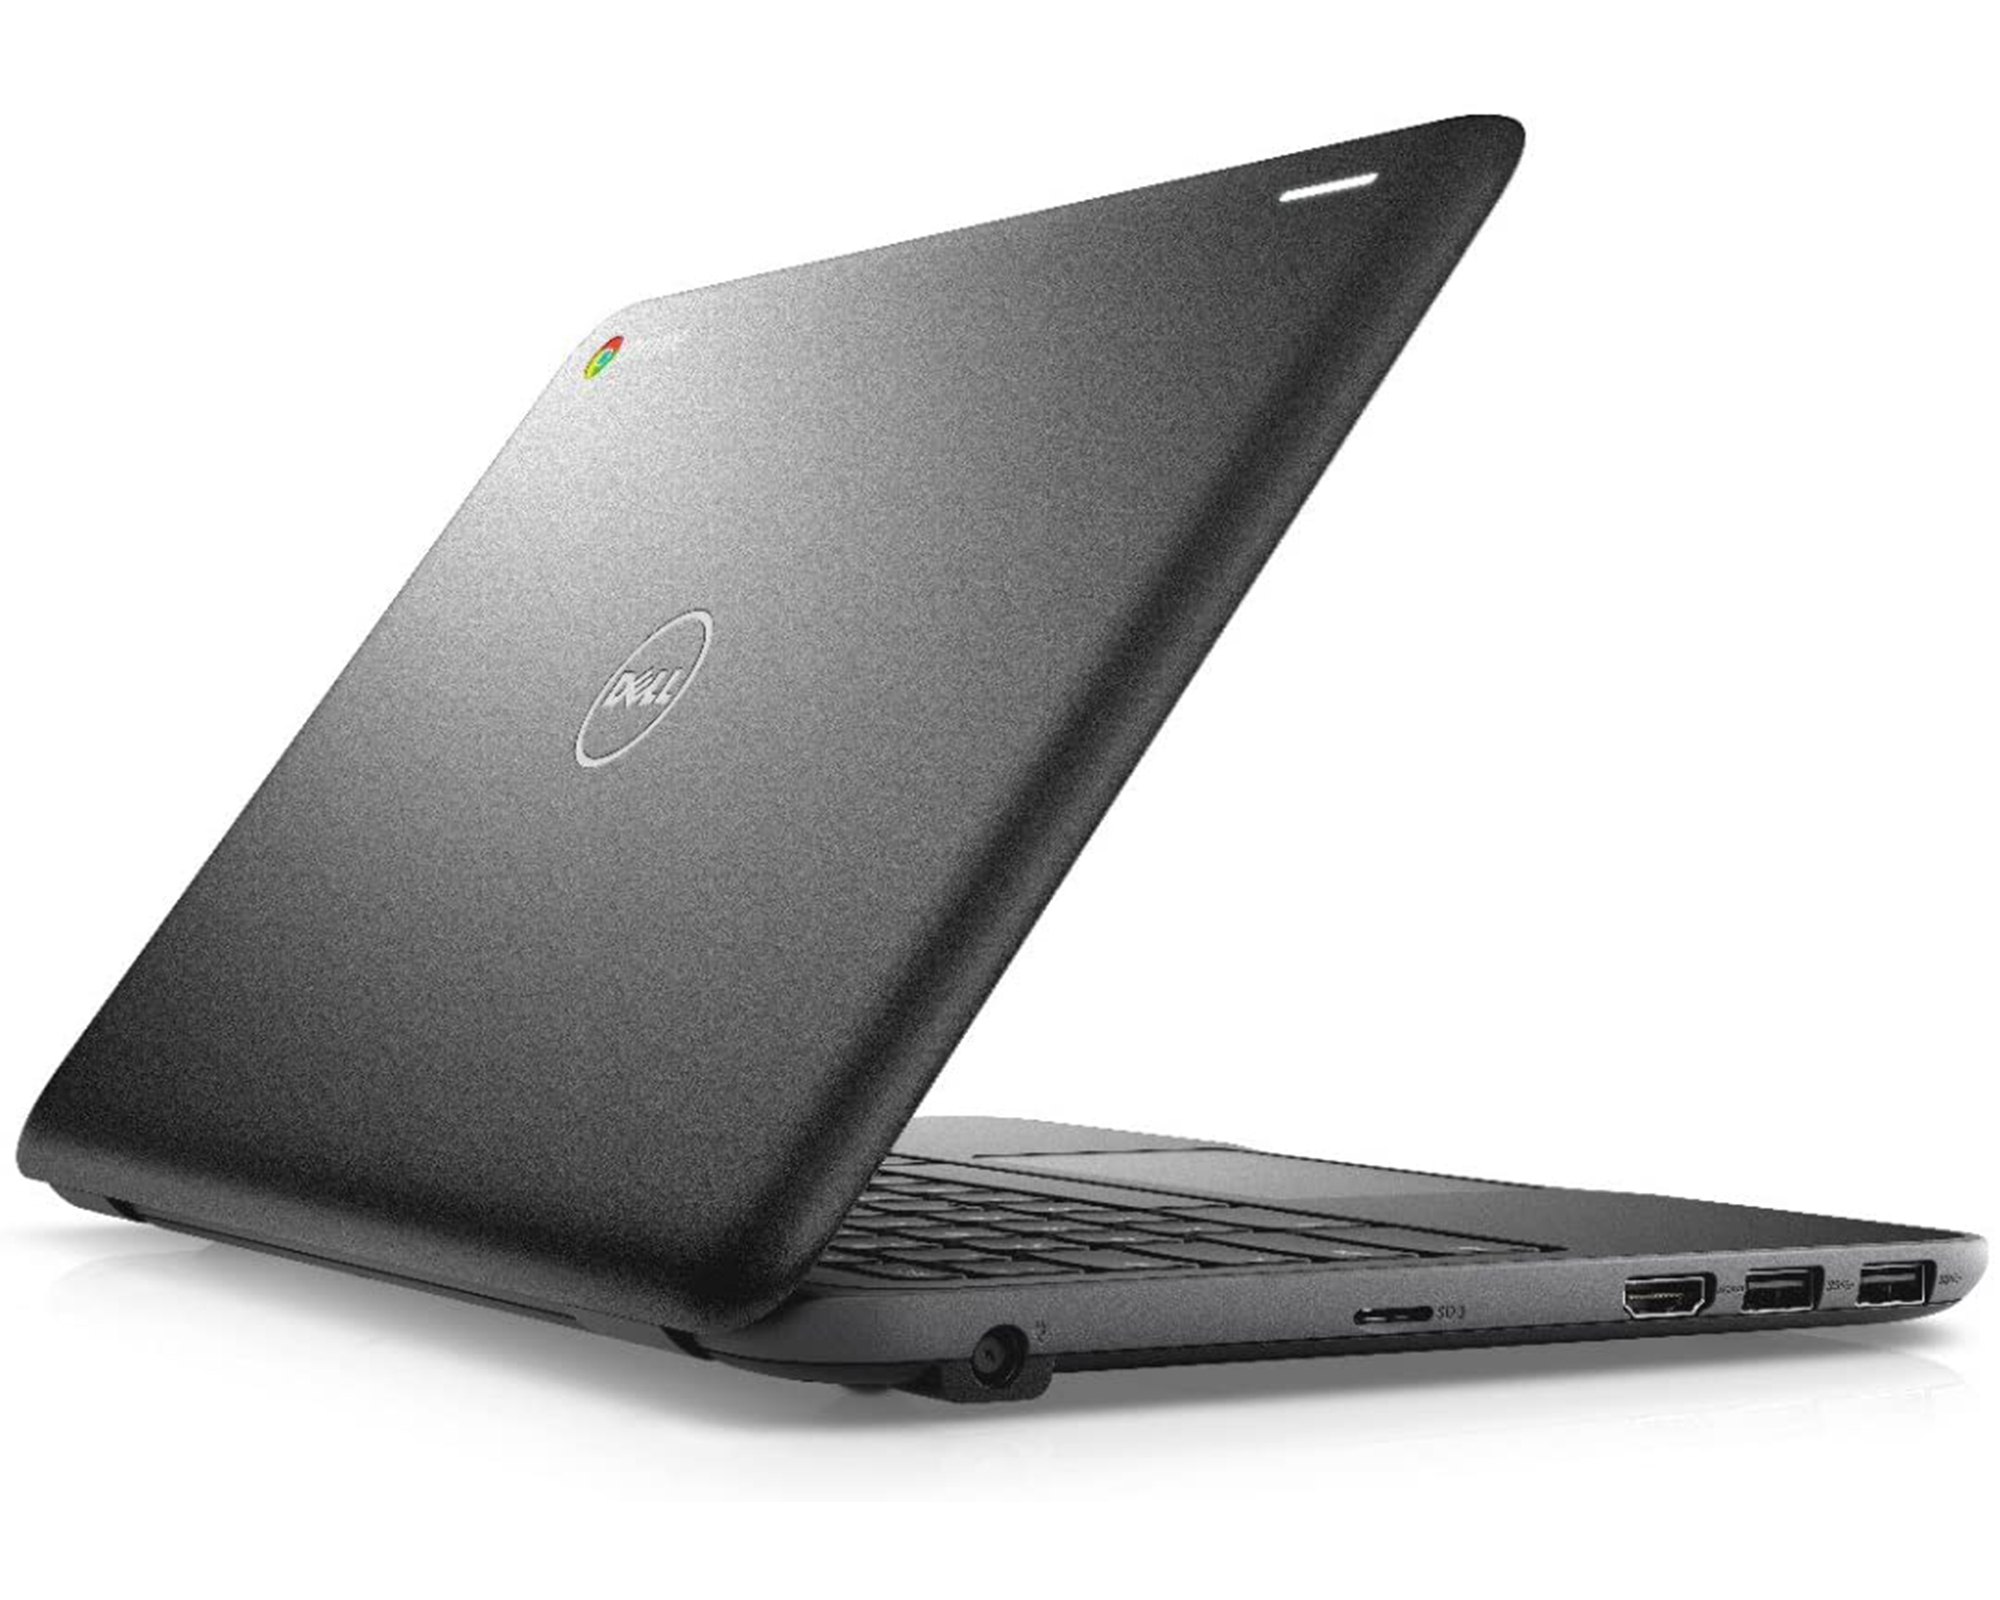 Dell Chromebook 11 3180 Intel Celeron 1.60 GHz 4Gb Ram 16GB Chrome OS - Scratch and Dent - image 5 of 9